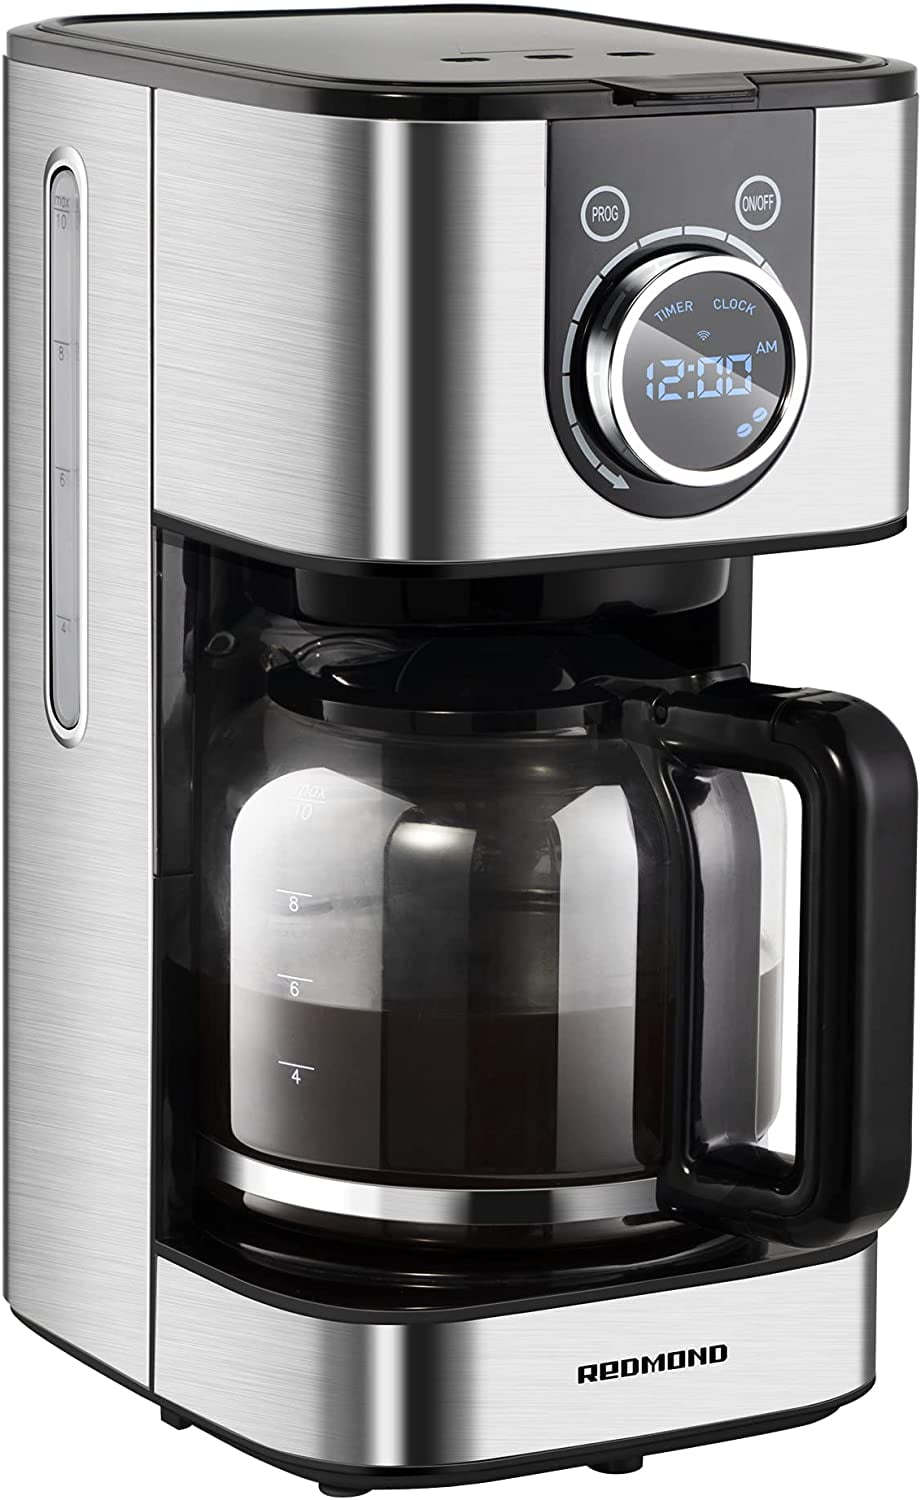 Rise by Dash - RCM100GBBK04 - 10 Cups Black Coffee Maker